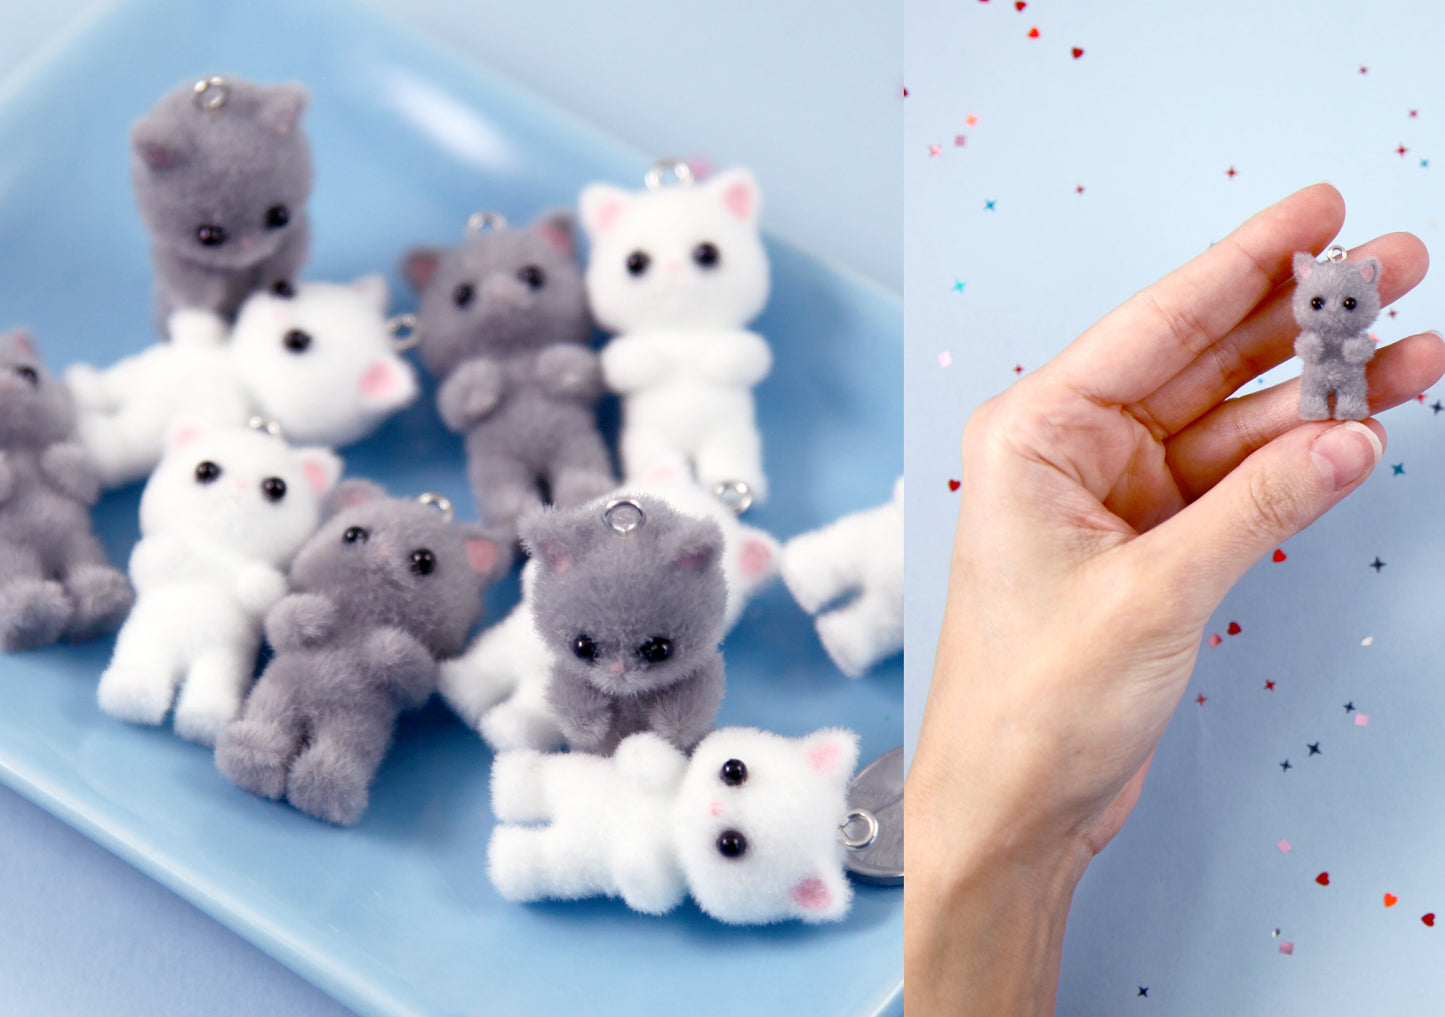 Cute Kitten Charms - 35mm Mini Fuzzy Kitty Cat Pendant Kawaii Acrylic or Plastic Charms - 2 pc set